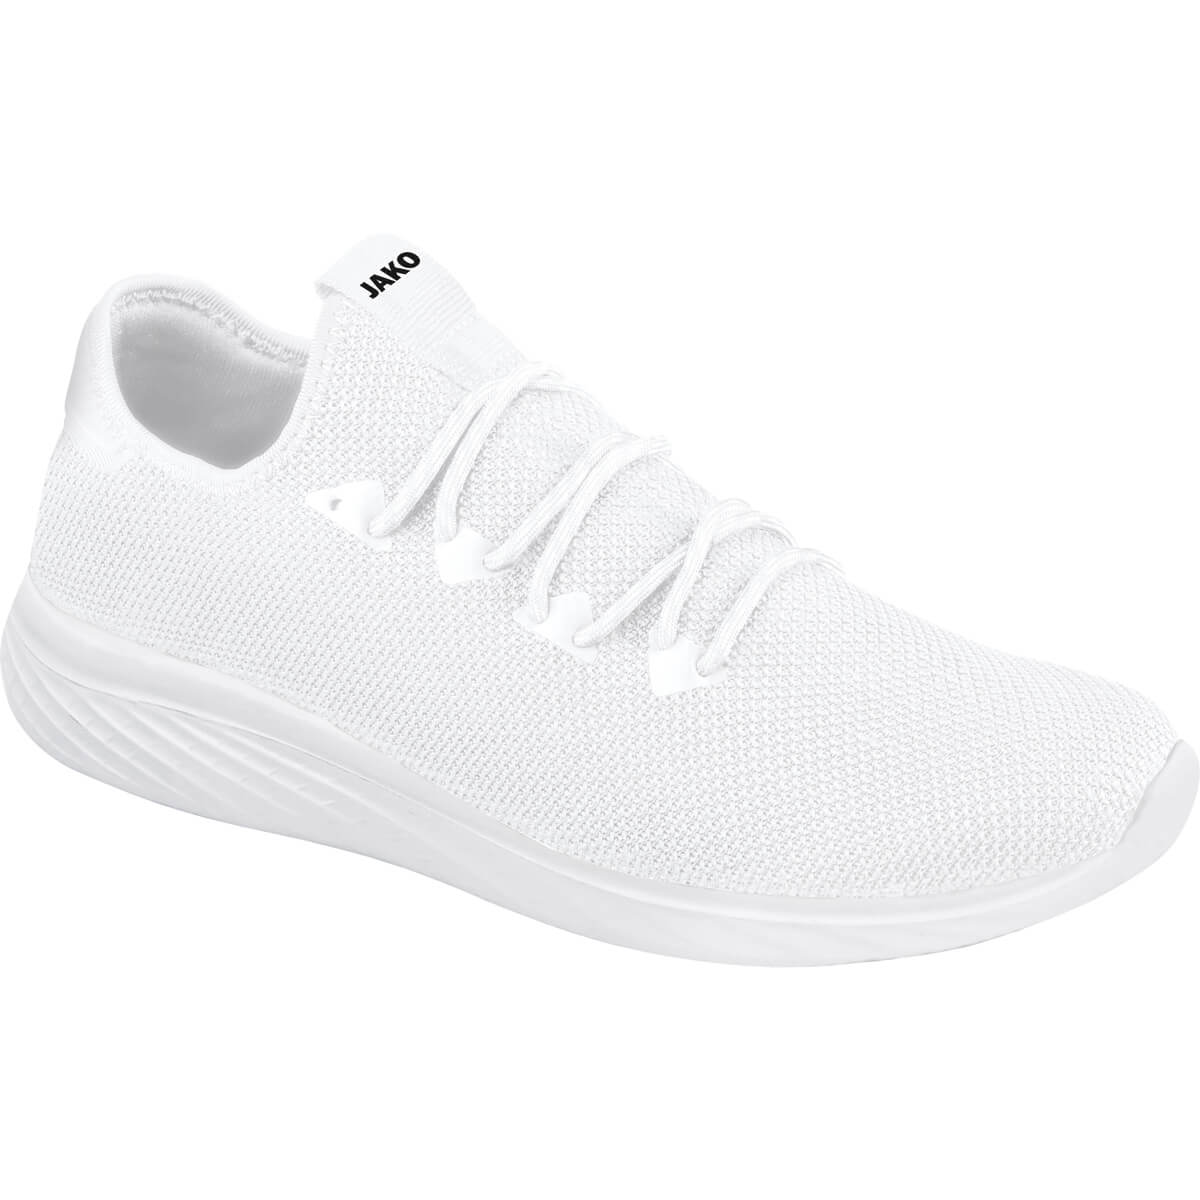 JAKO-5726-00 Chaussures de Loisir Striker 2.0 Blanc